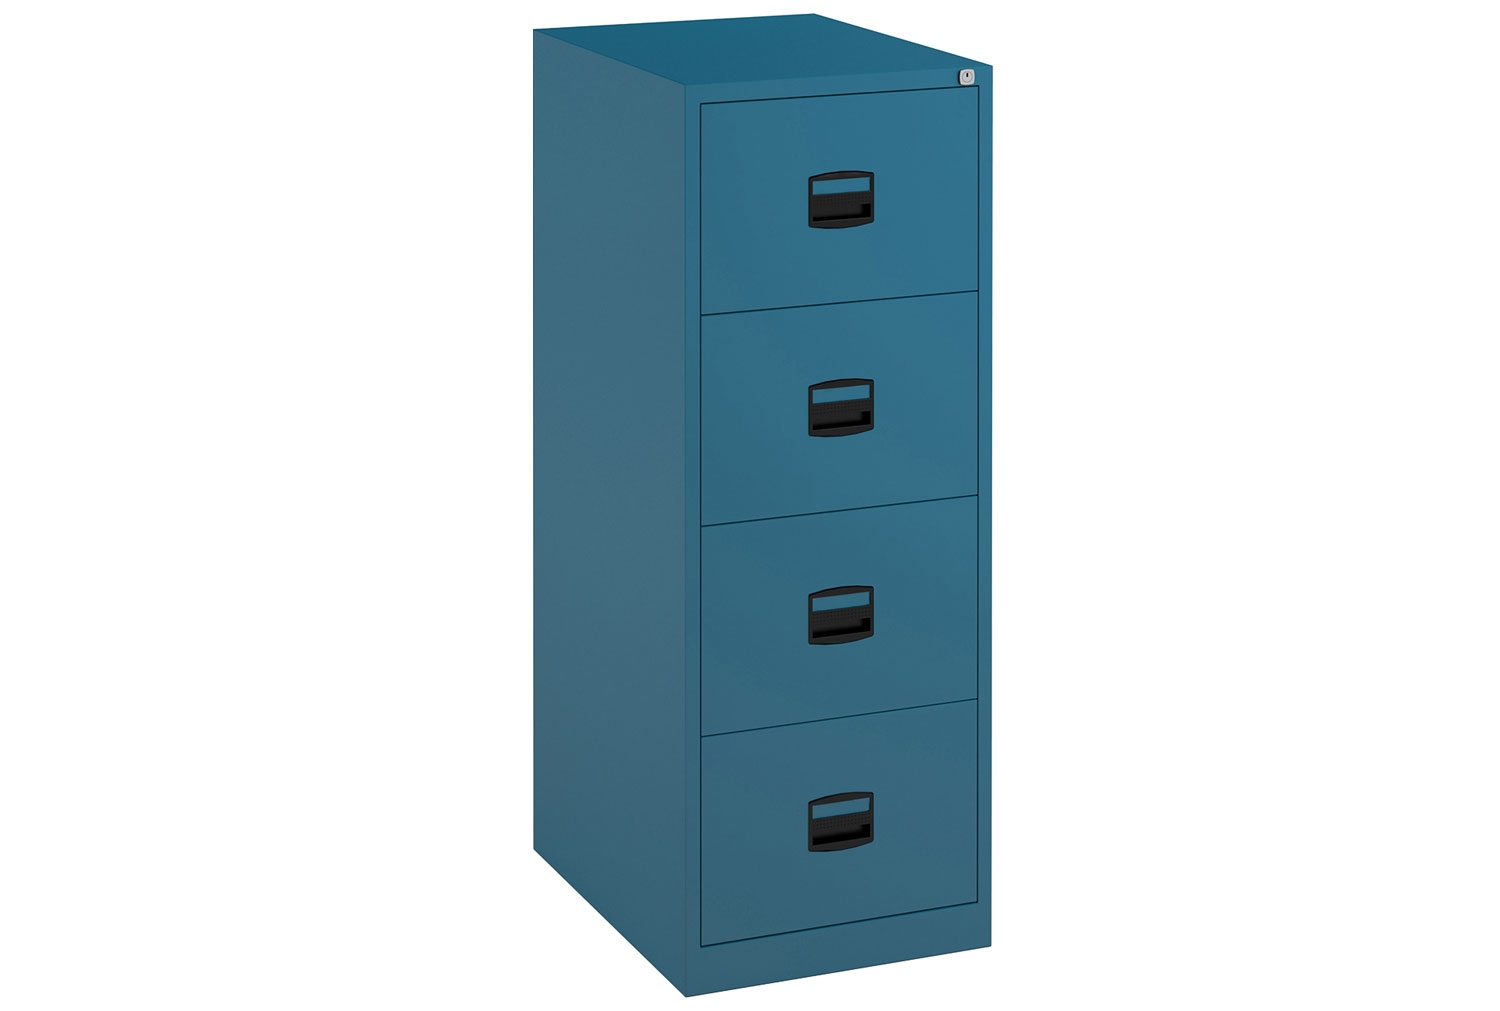 Economy Filing Cabinet, 4 Drawer - 47wx62dx132h (cm), Blue